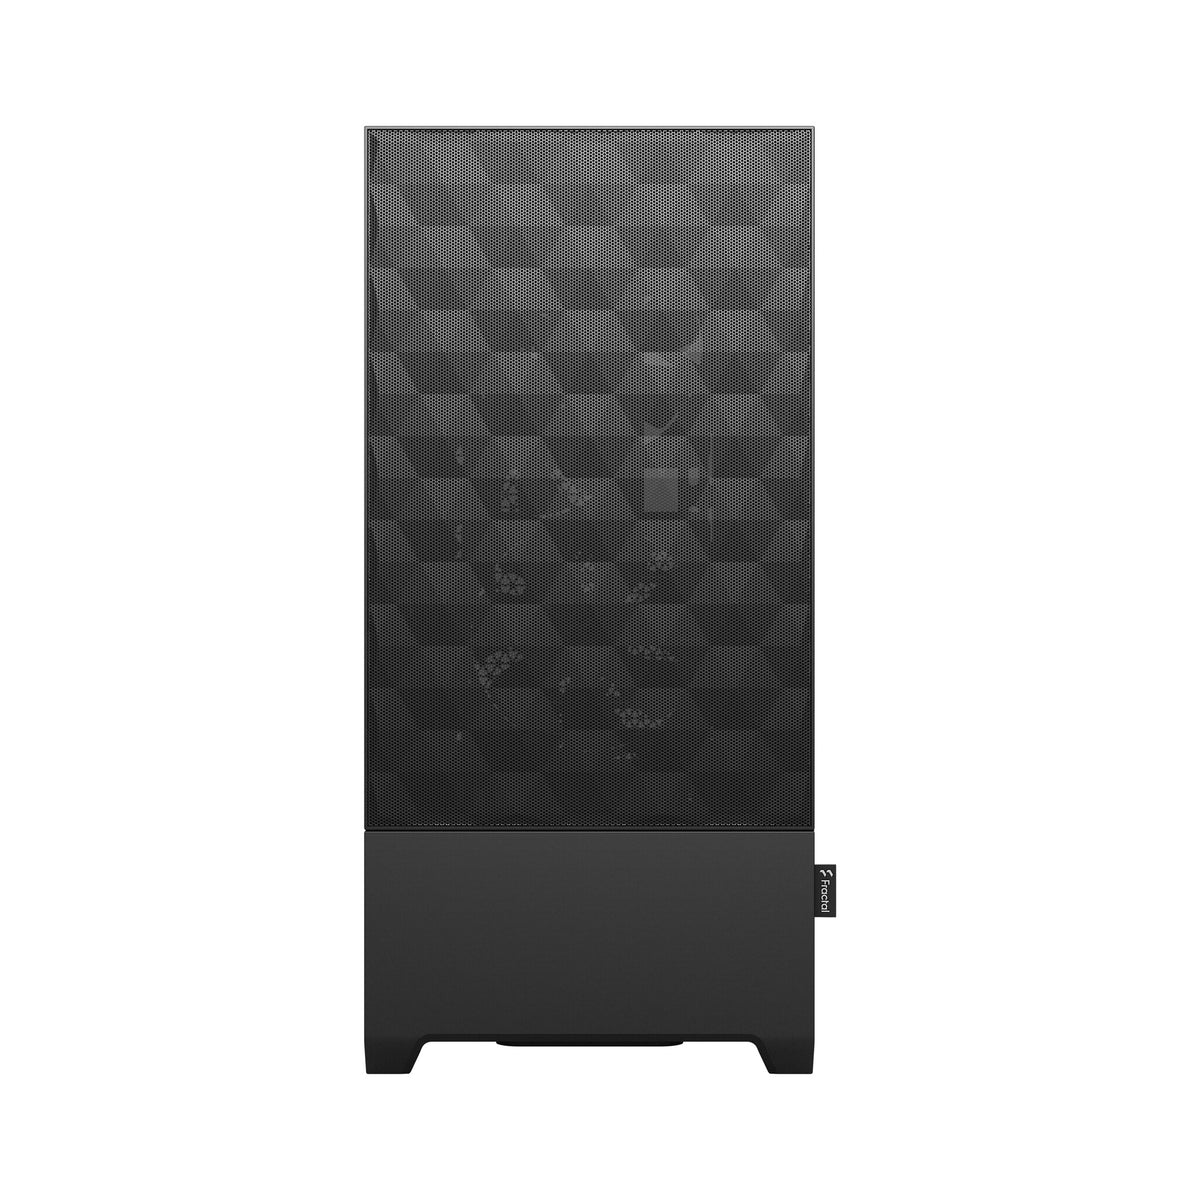 Fractal Design Pop Air - ATX Mid Tower Case in Black